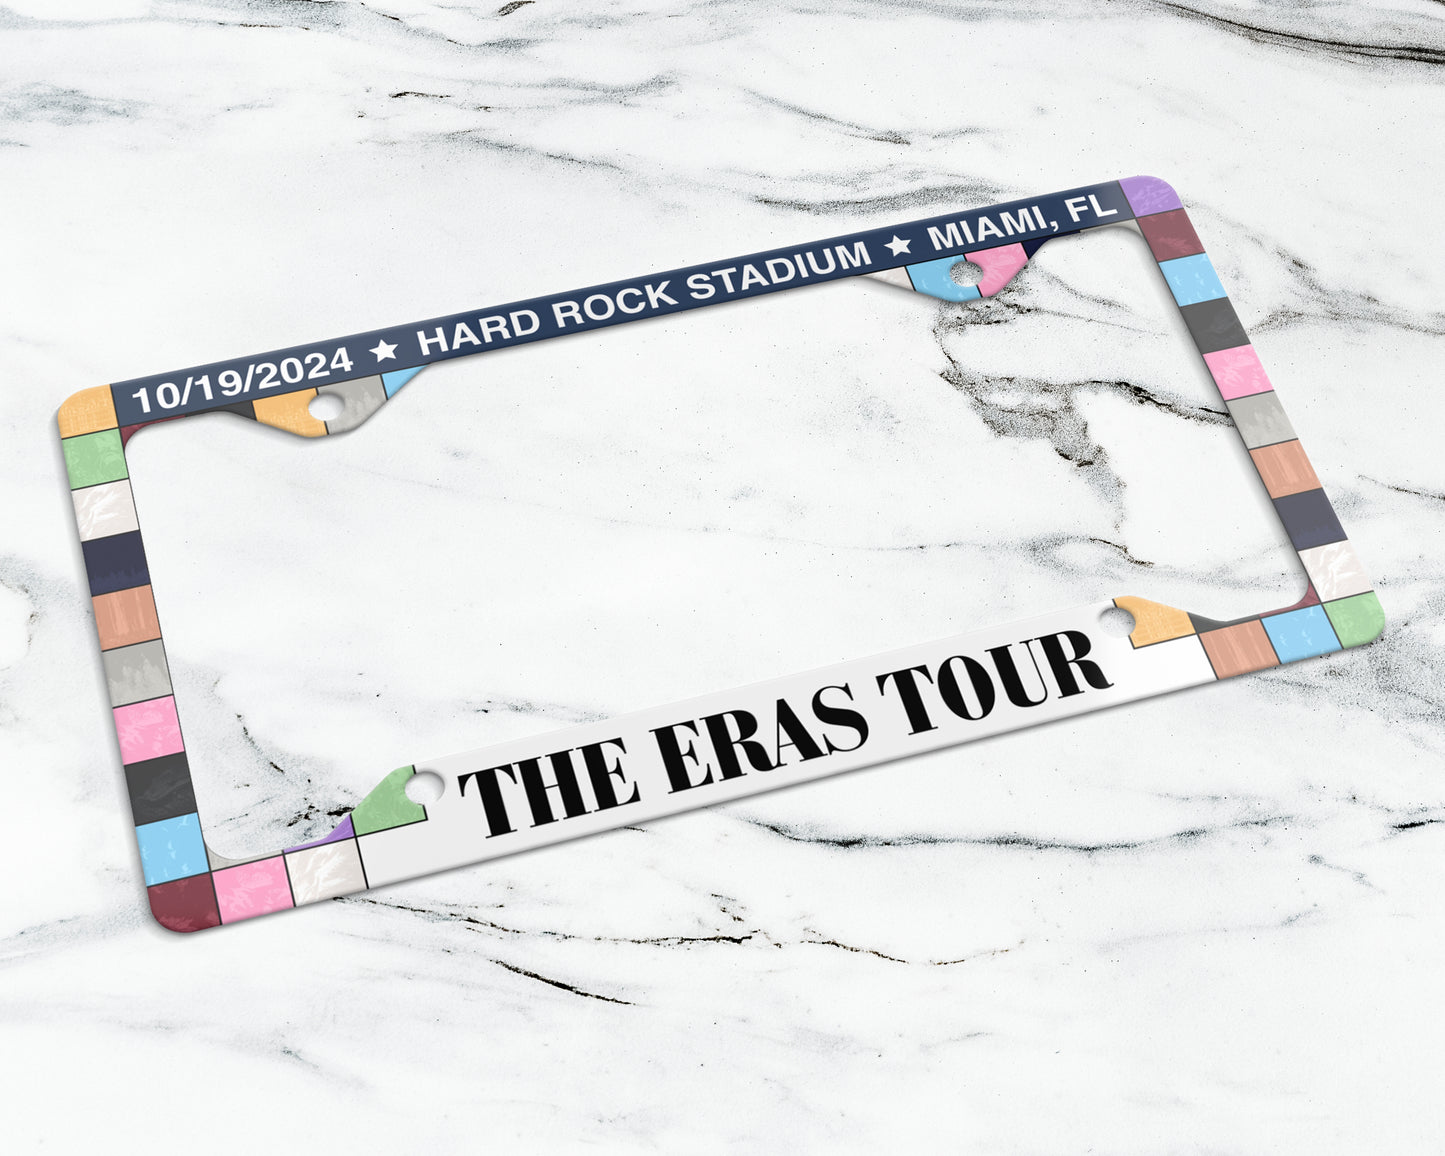 The Eras Tour license plate frame